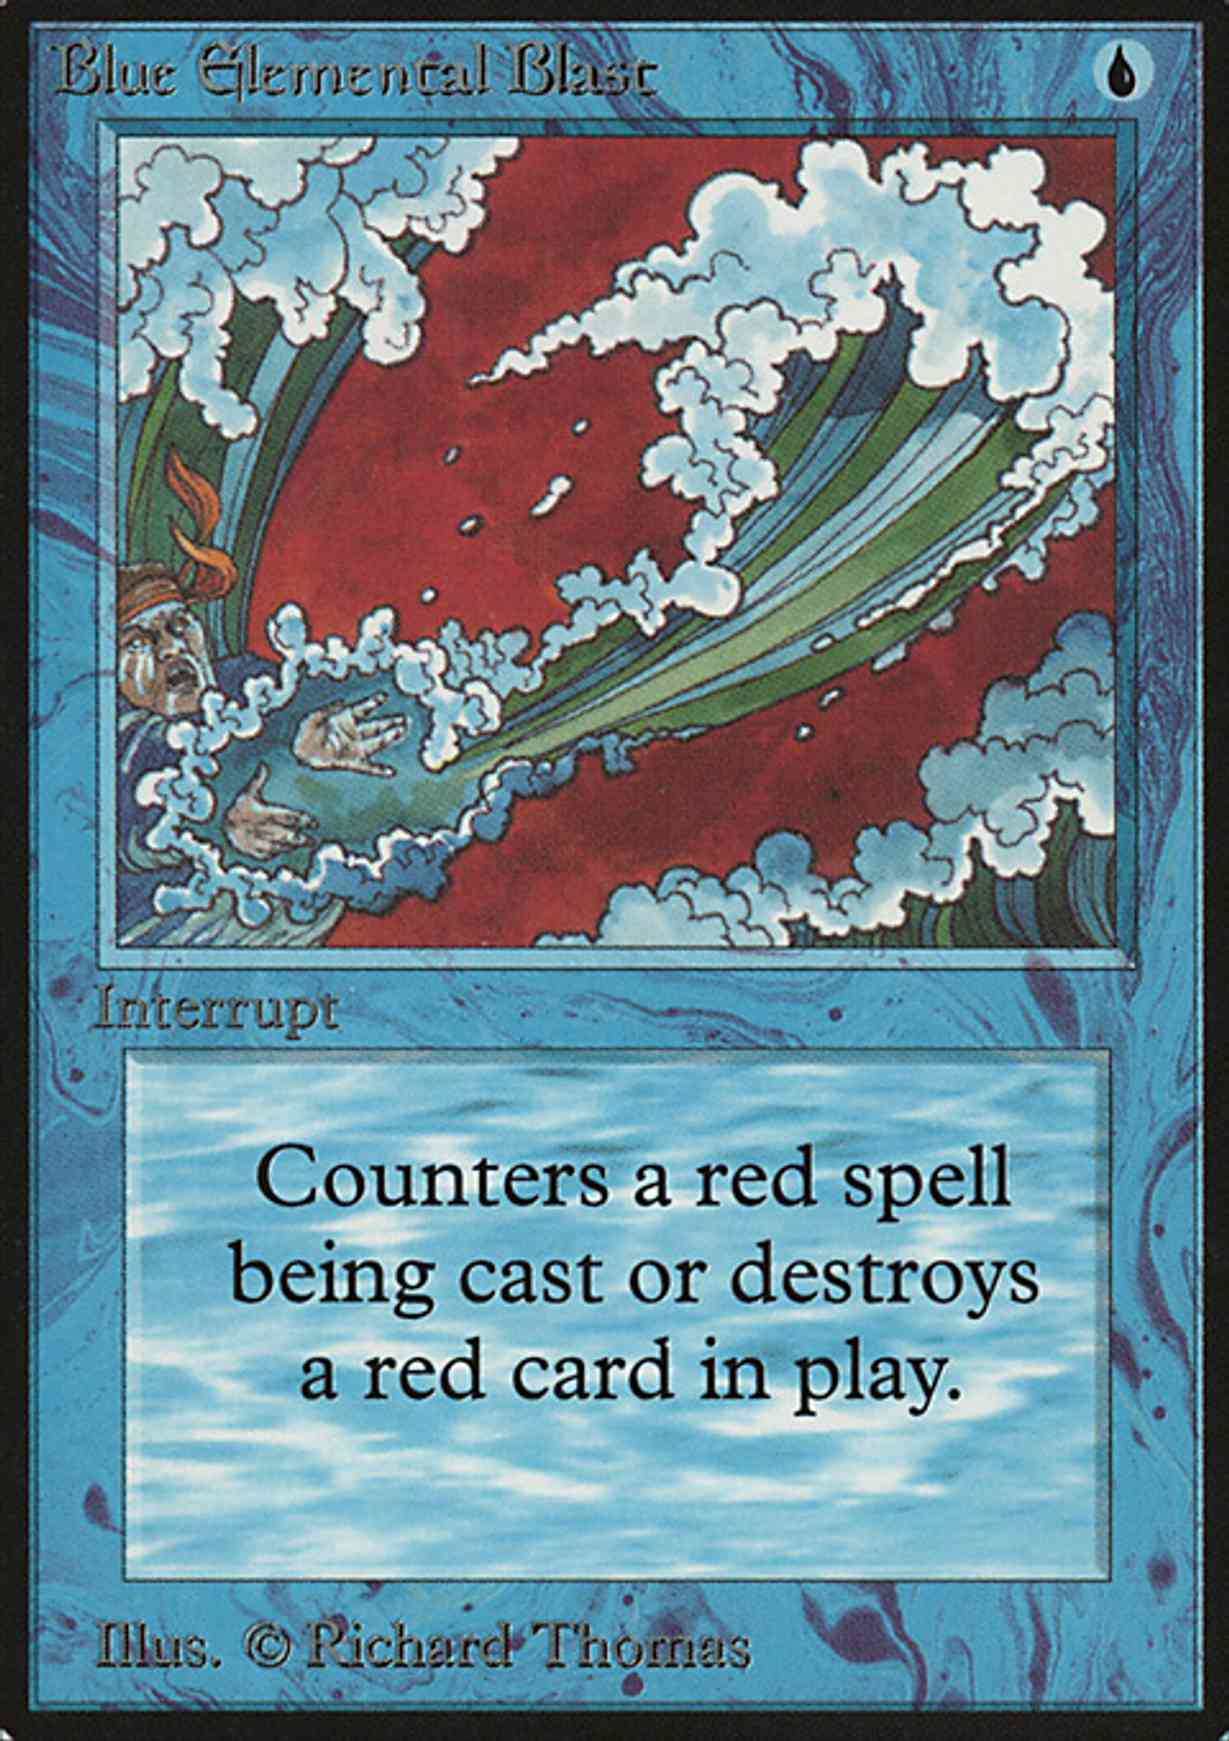 Blue Elemental Blast magic card front